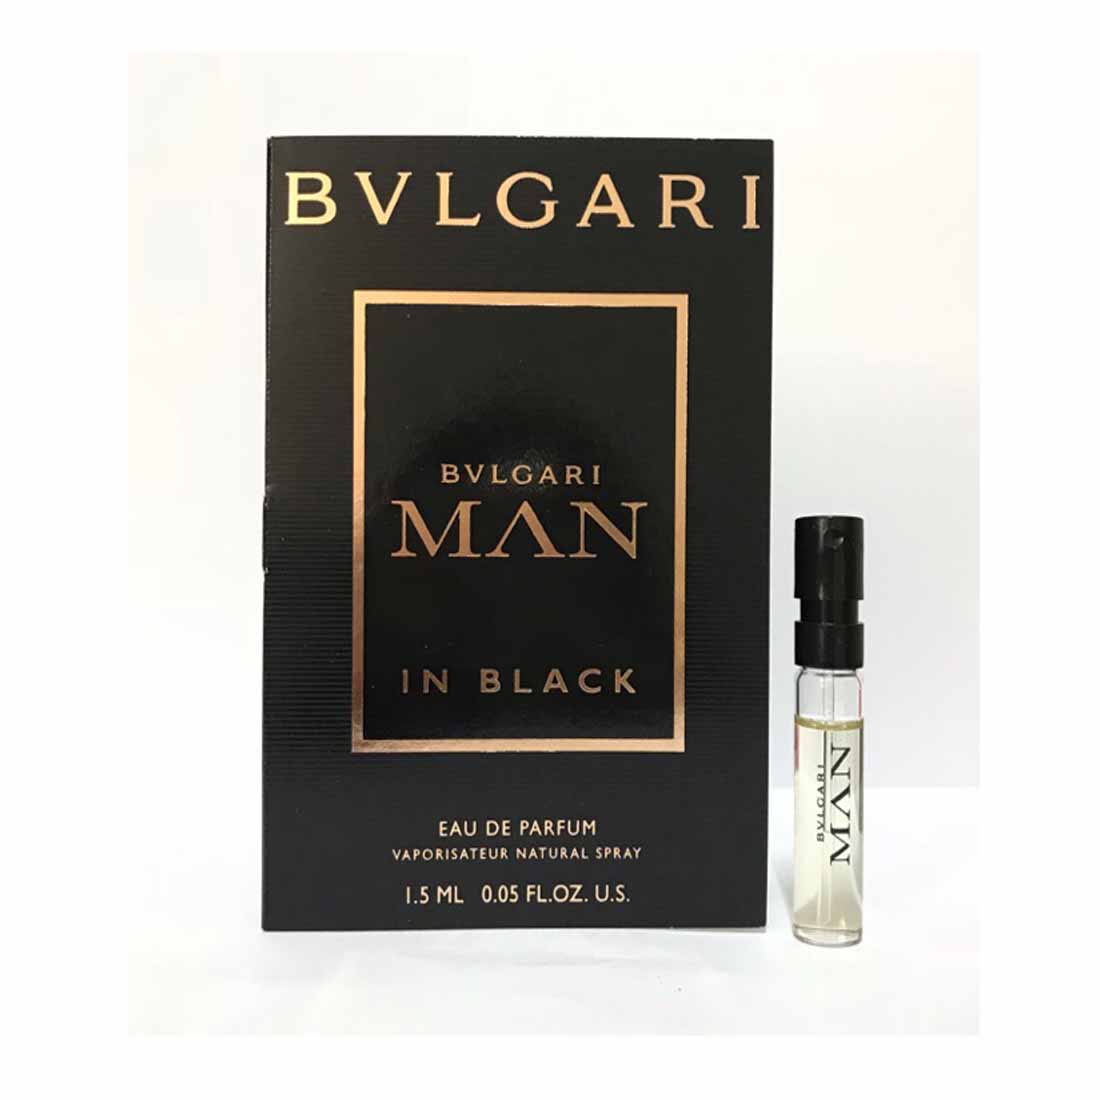 Bvlgari Man in Black EDP Vial For Men-1.5ml